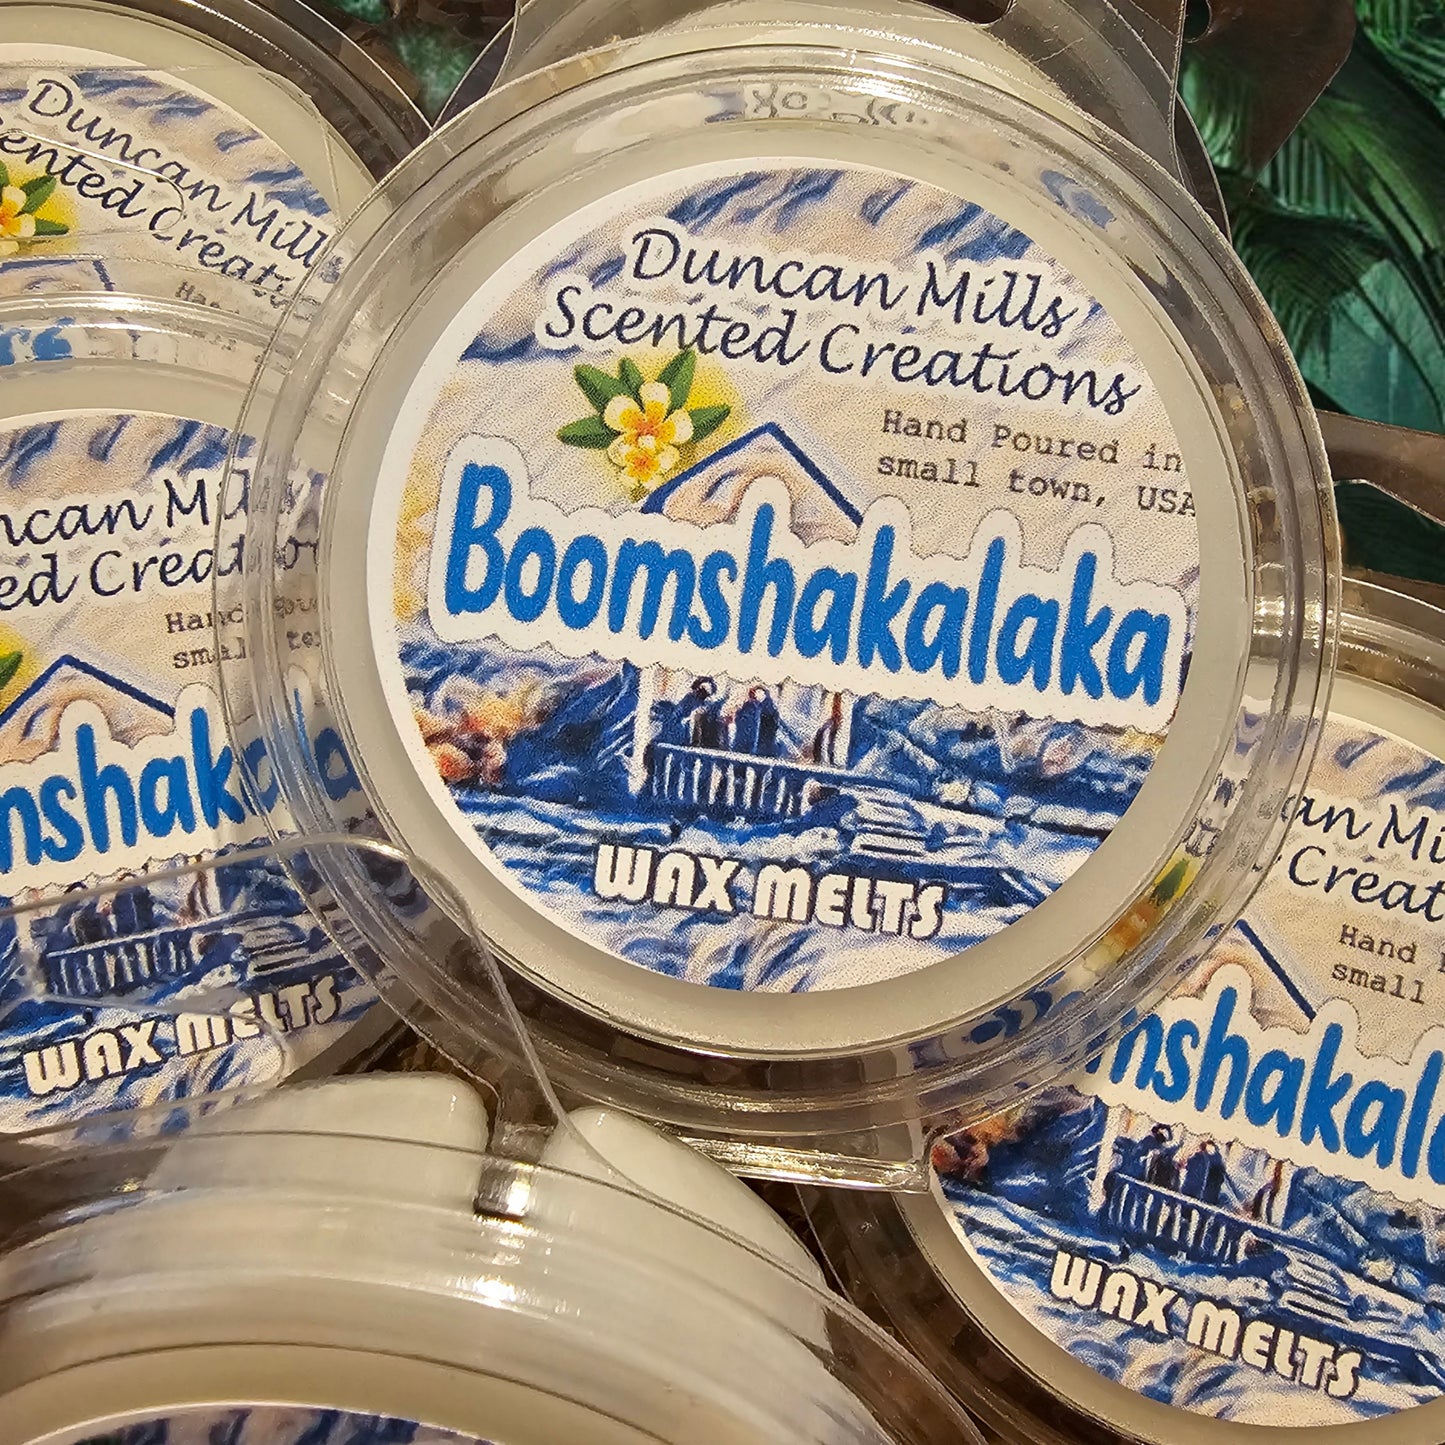 BOOMSHAKALAKA wax melts